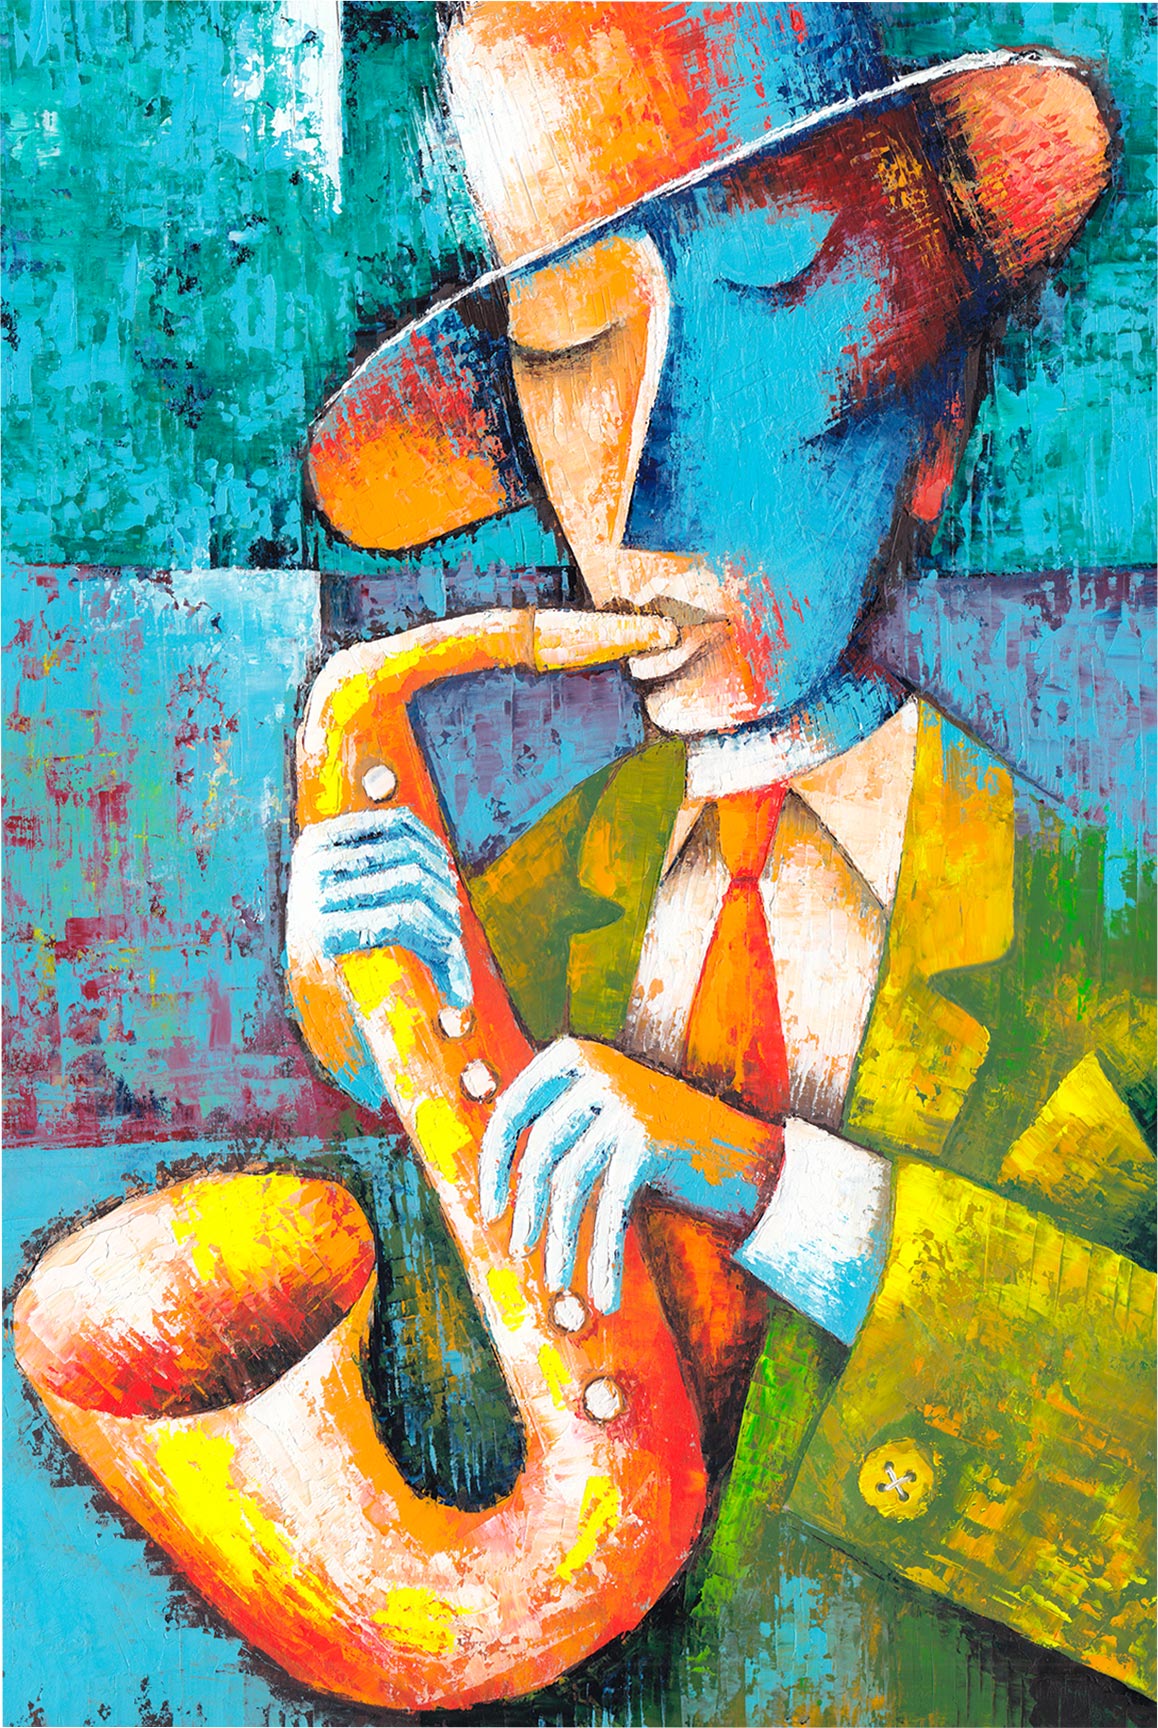 Quadro Retangular - Saxofonista Pintura